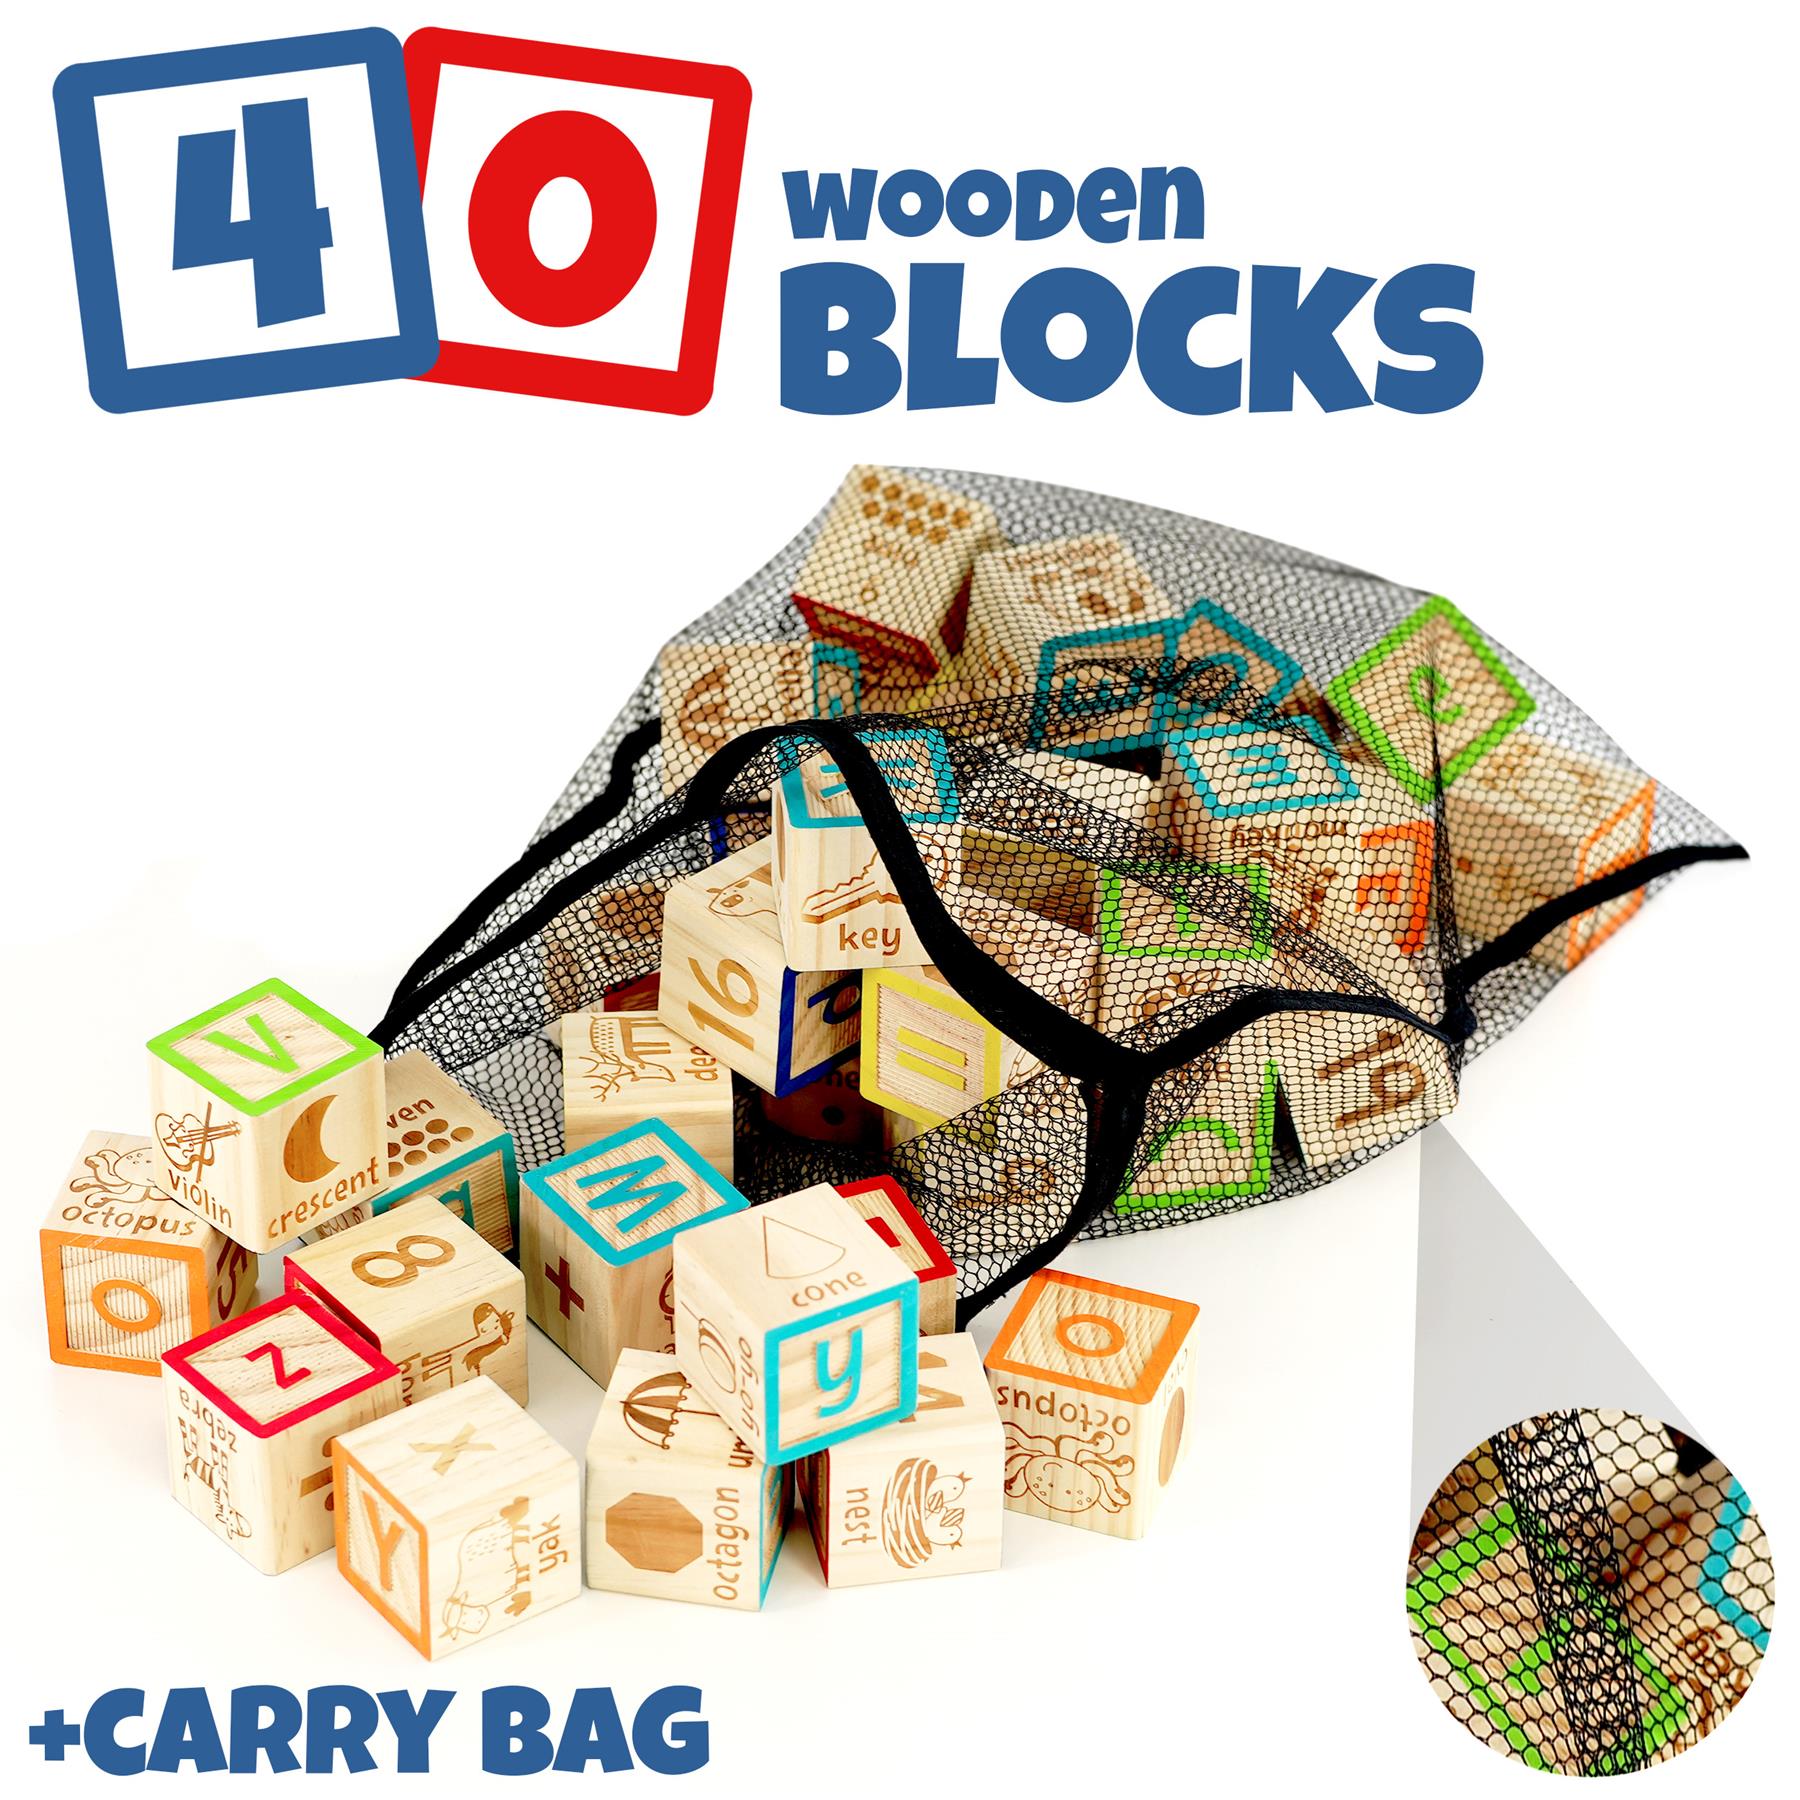 Wooden ABC 123 Block Set Kids Educational Toys by The Magic Toy Shop - UKBuyZone